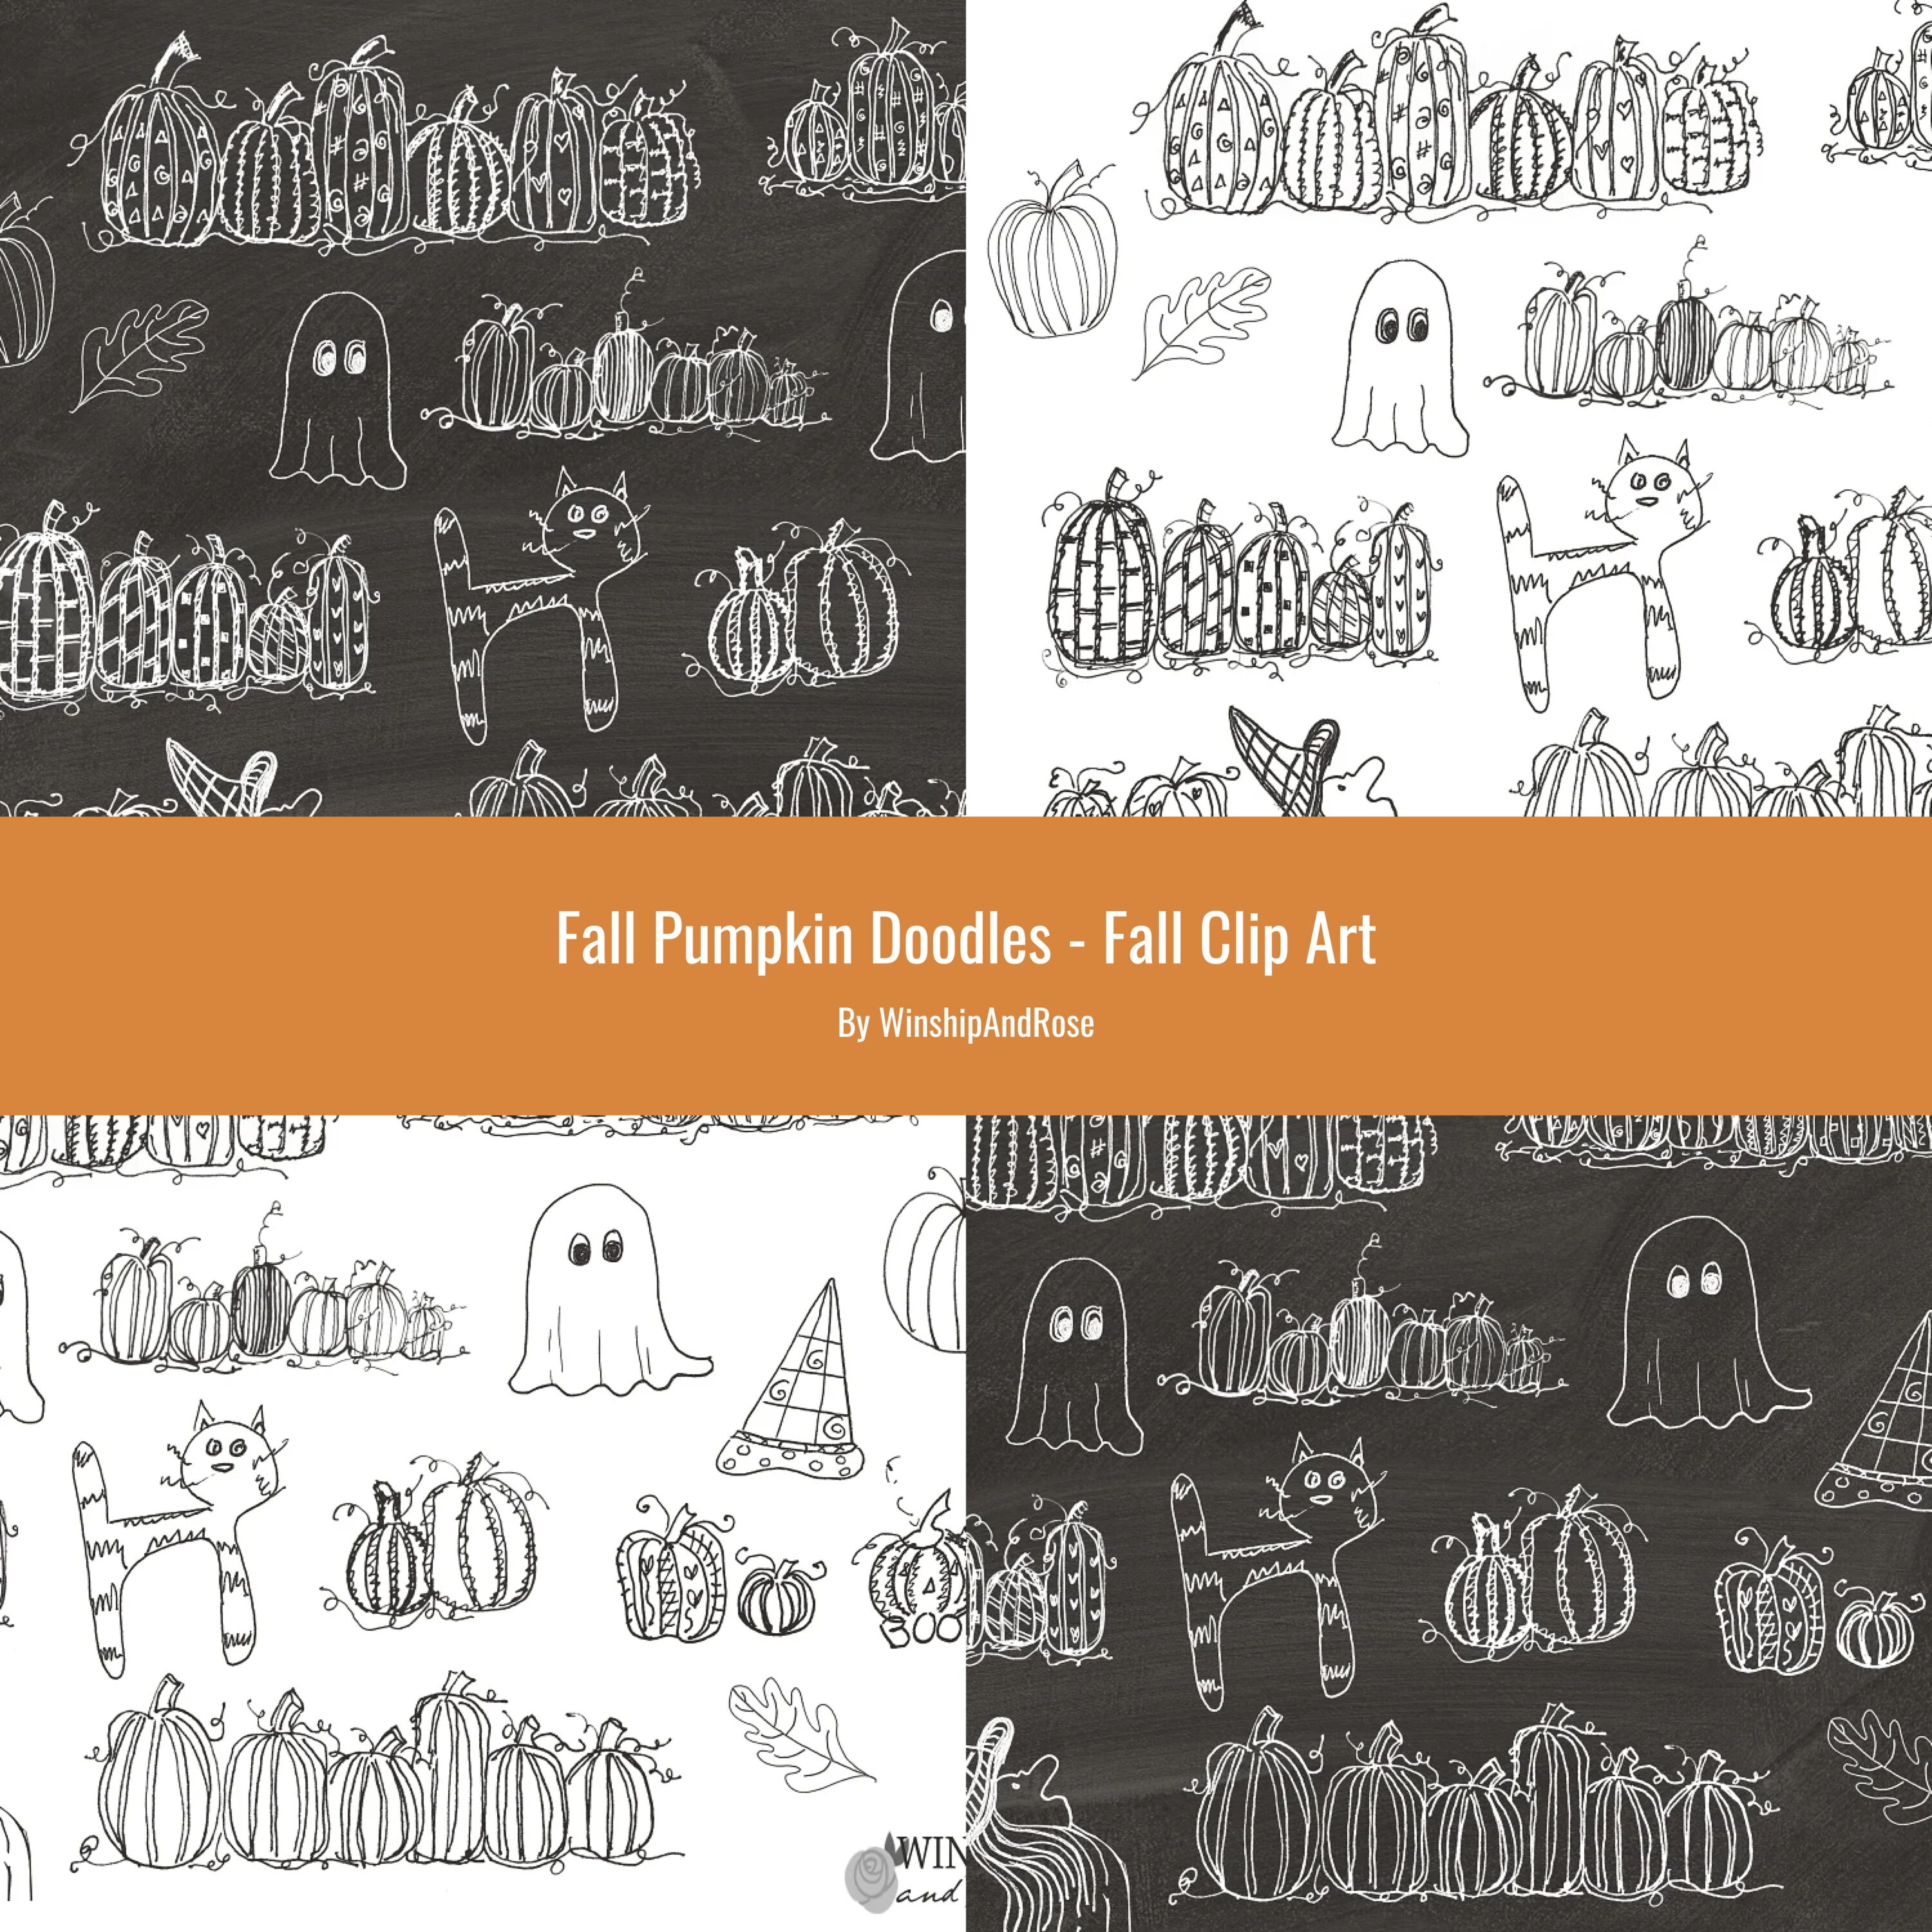 Fall Pumpkin Doodles - Fall Clip Art.